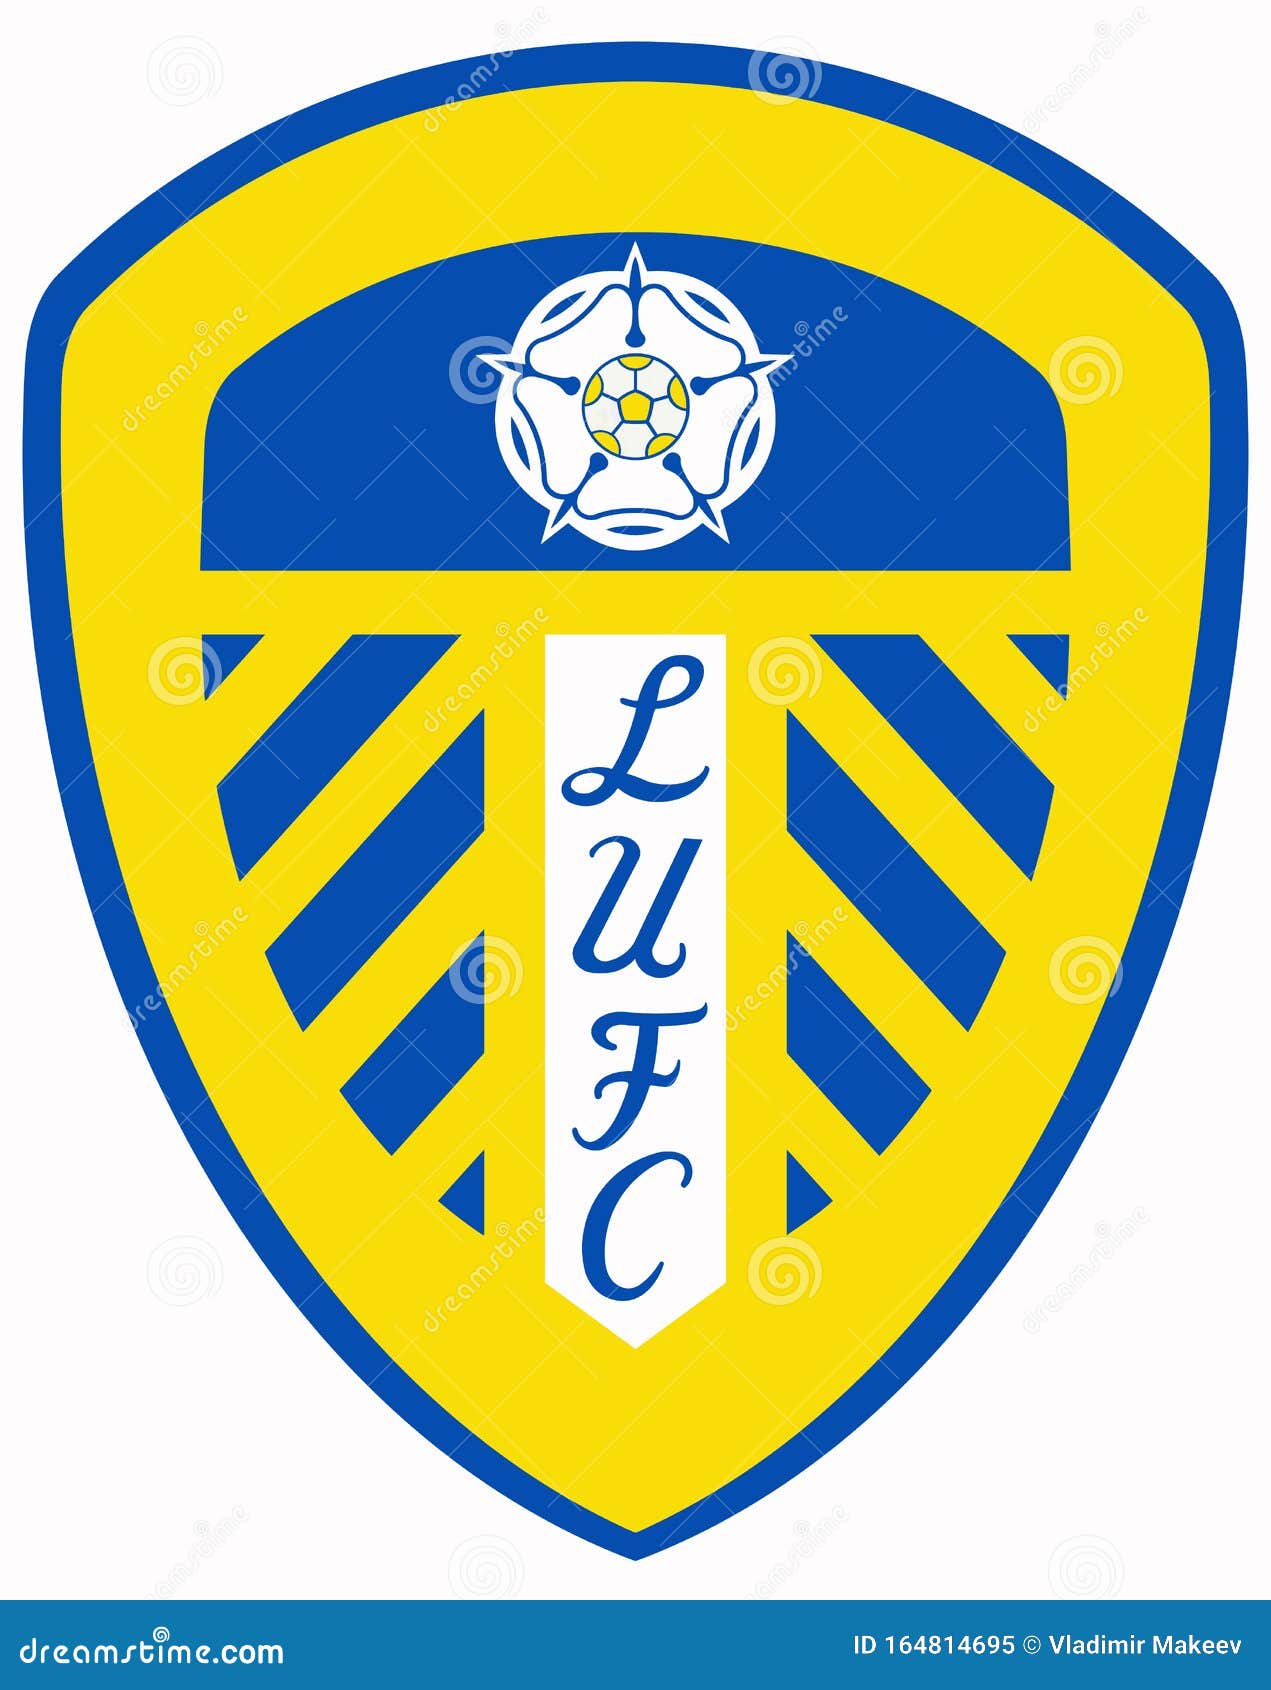 The Emblem of the Football Club Leeds United Association Football Club ...